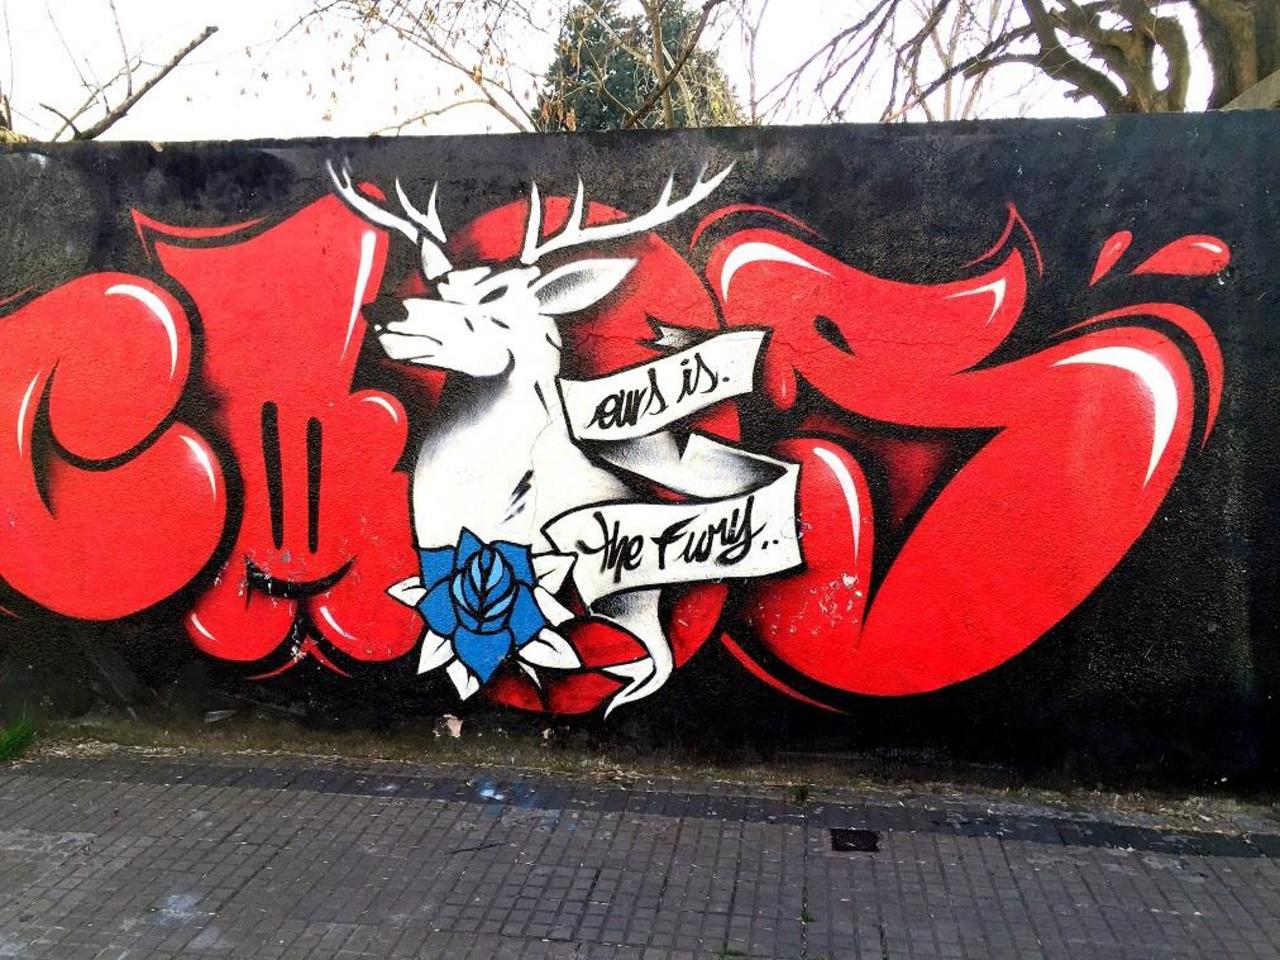 #Graffiti de hoy: << La cierva blanca de Borges >> calle 9 66y67 #LaPlata #Argentina #StreetArt #UrbanArt #ArteUrbano http://t.co/PW7kOqN8lk